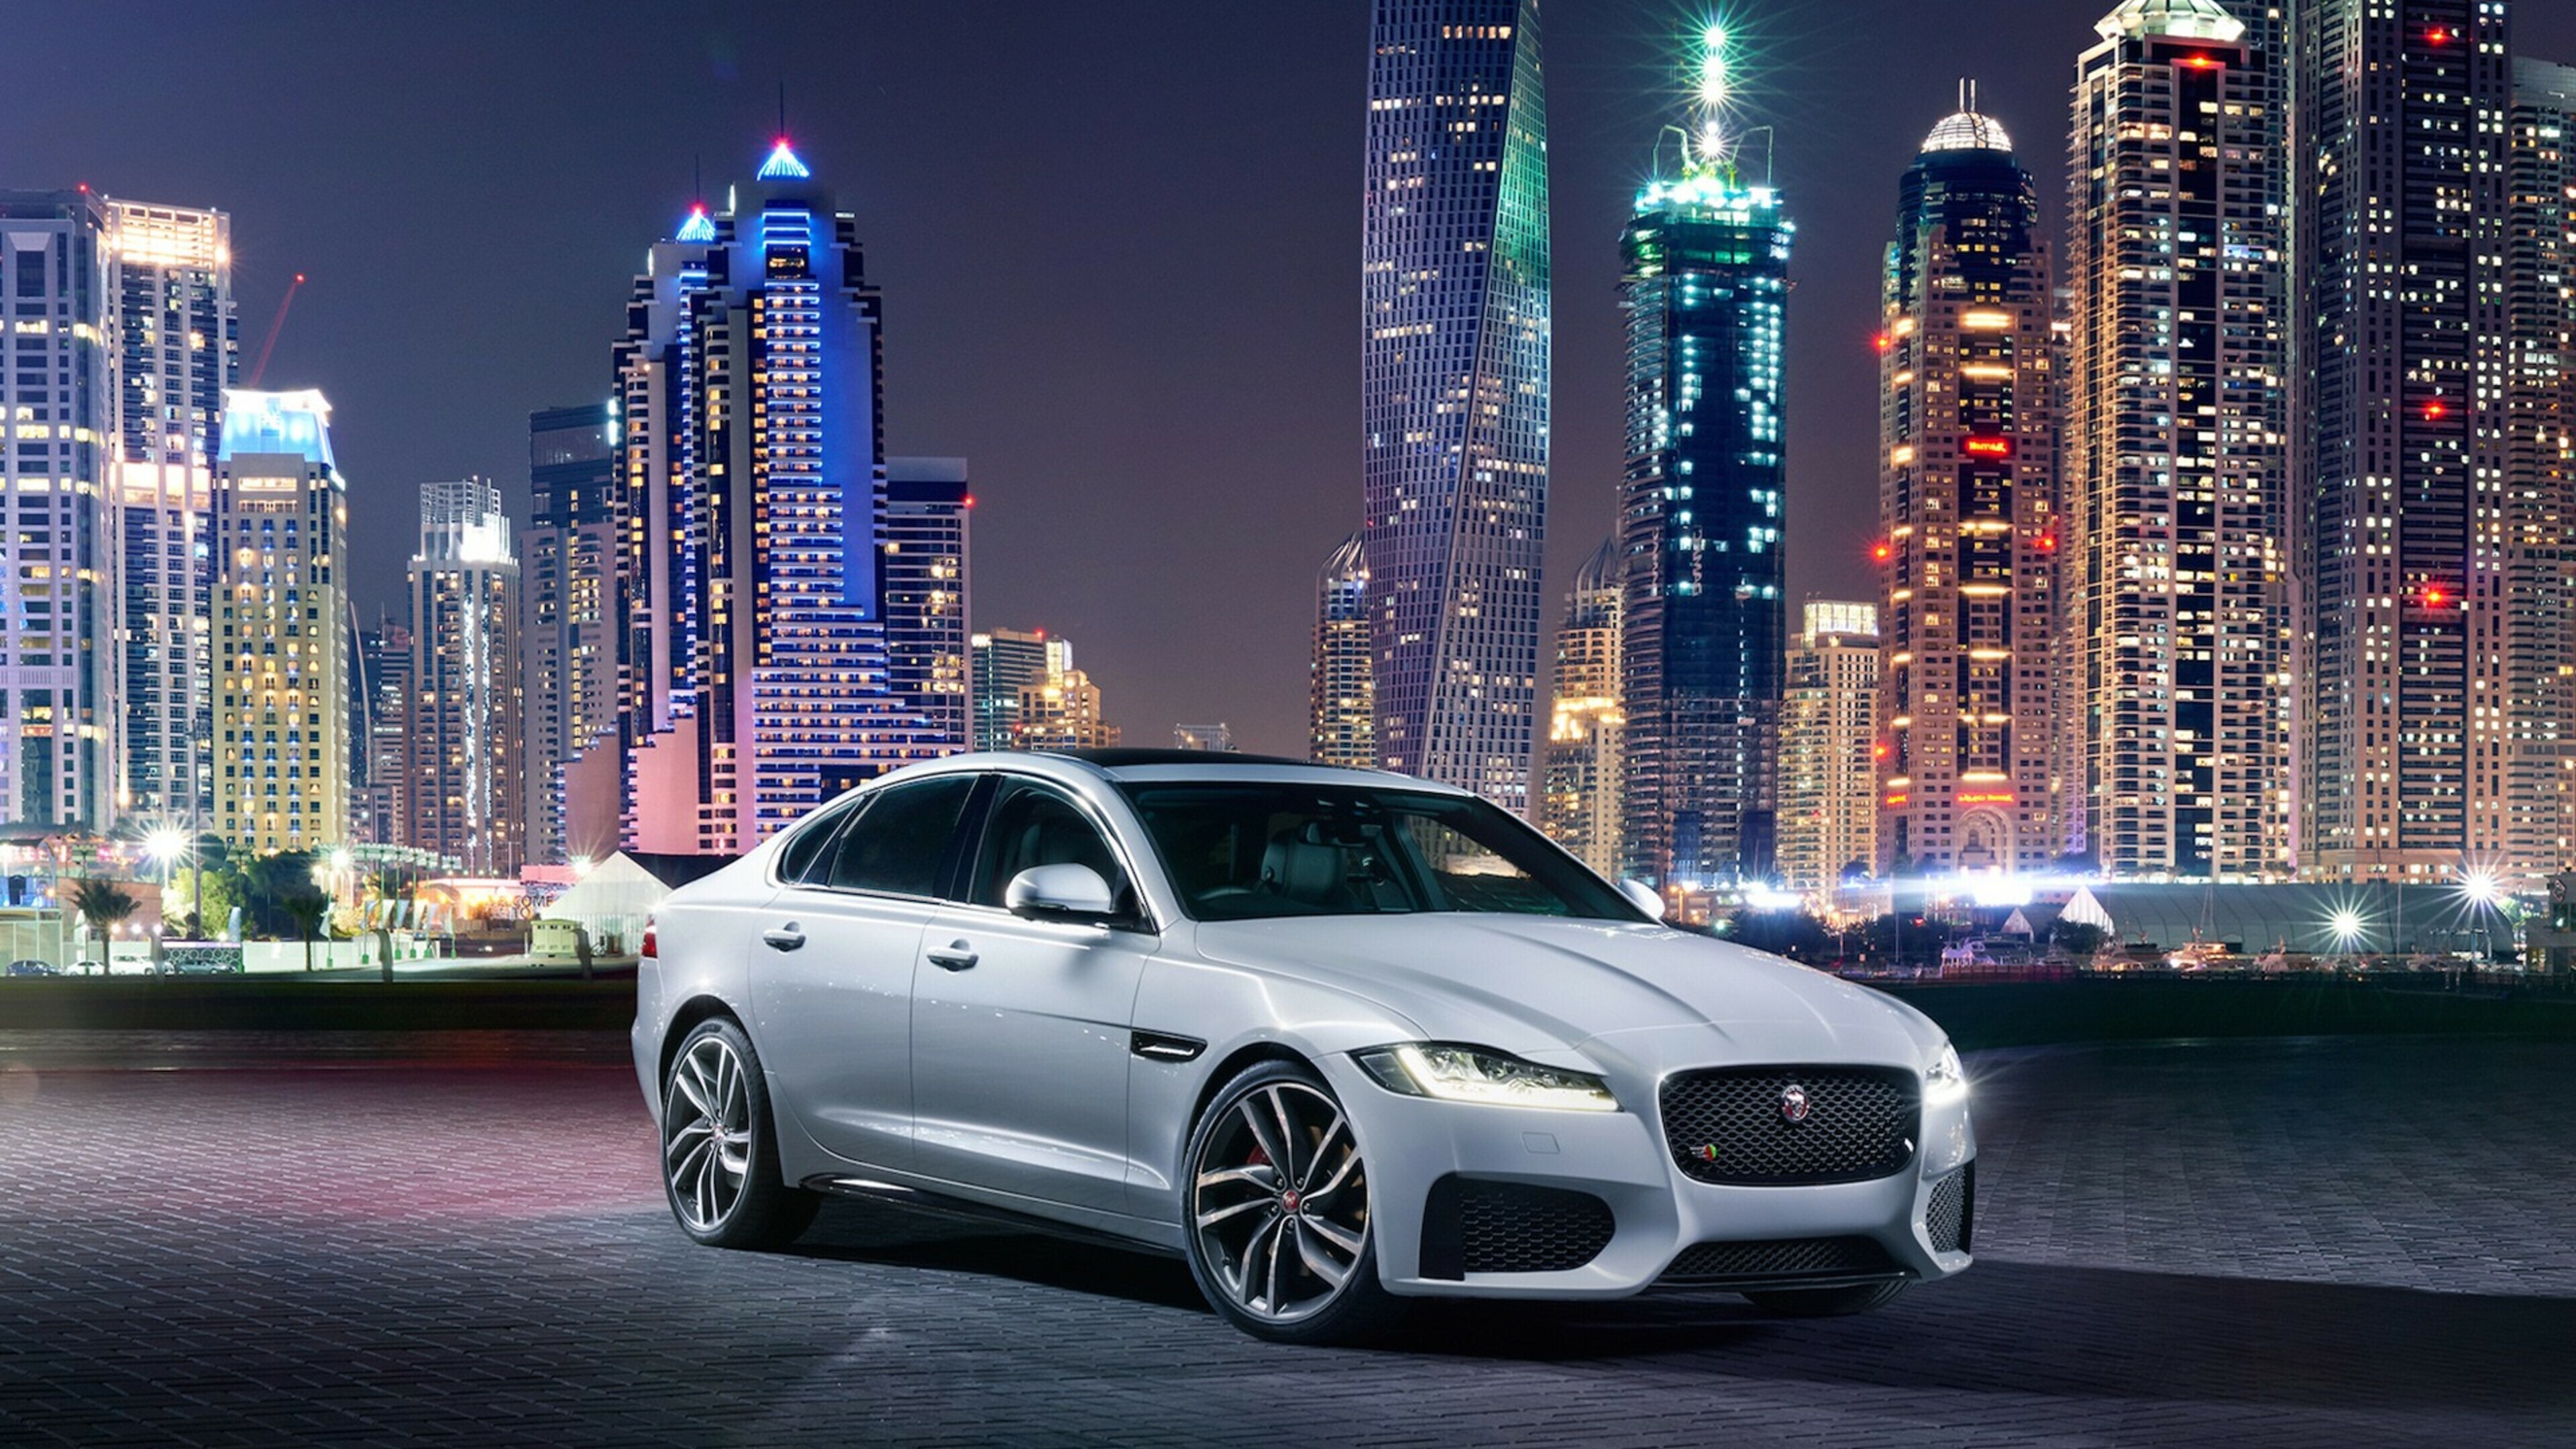 Jaguar Cars: An automotive manufacturer of luxury vehicles, XF, Luxury mid-size sports sedan car. 3840x2160 4K Wallpaper.